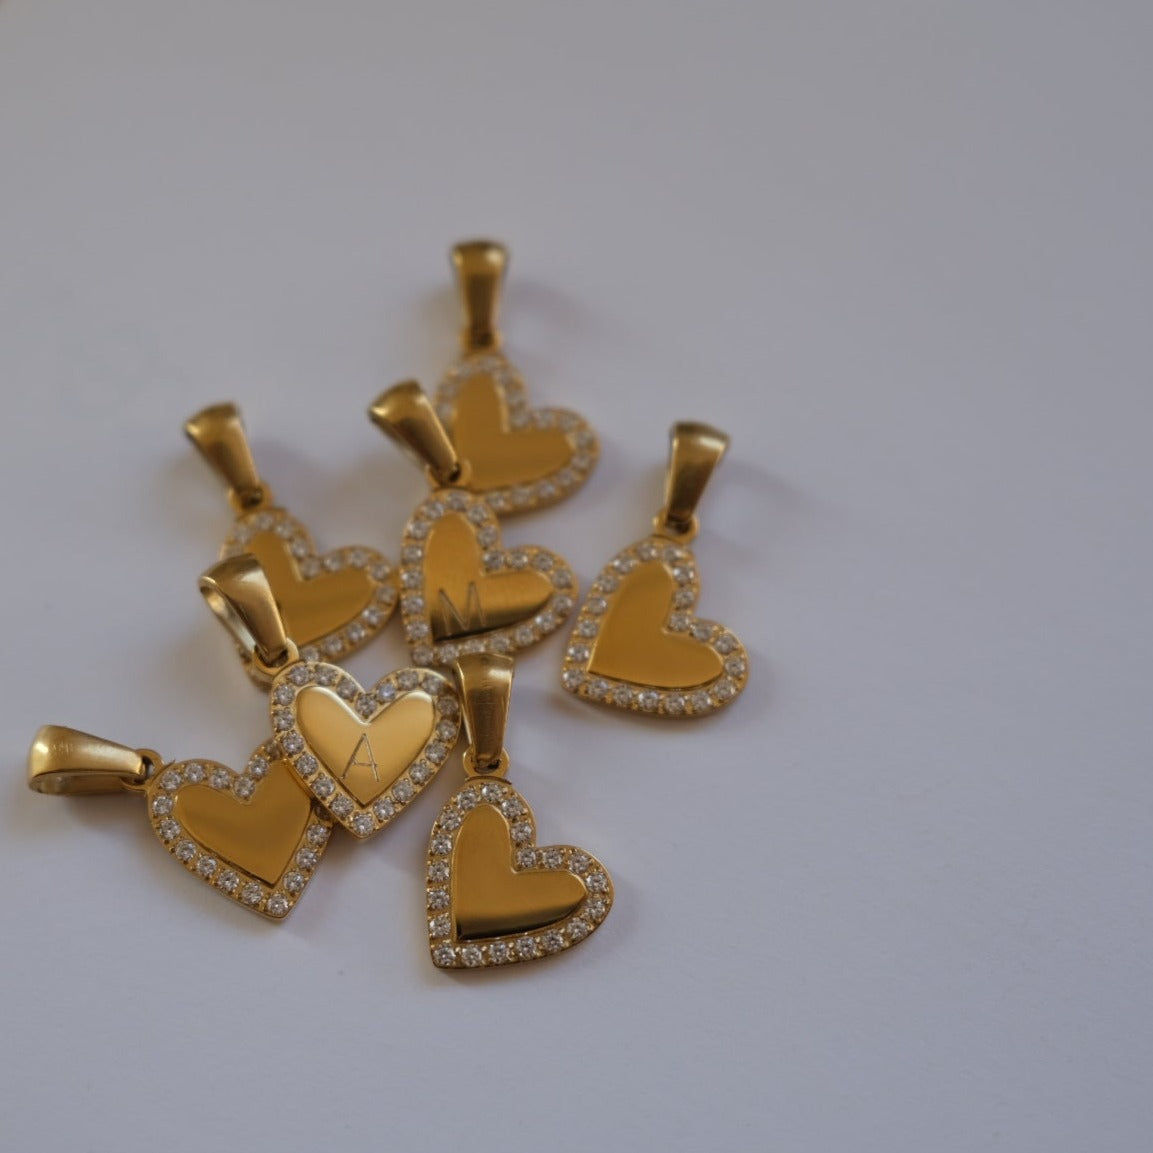 Tiny heart engraving pendant